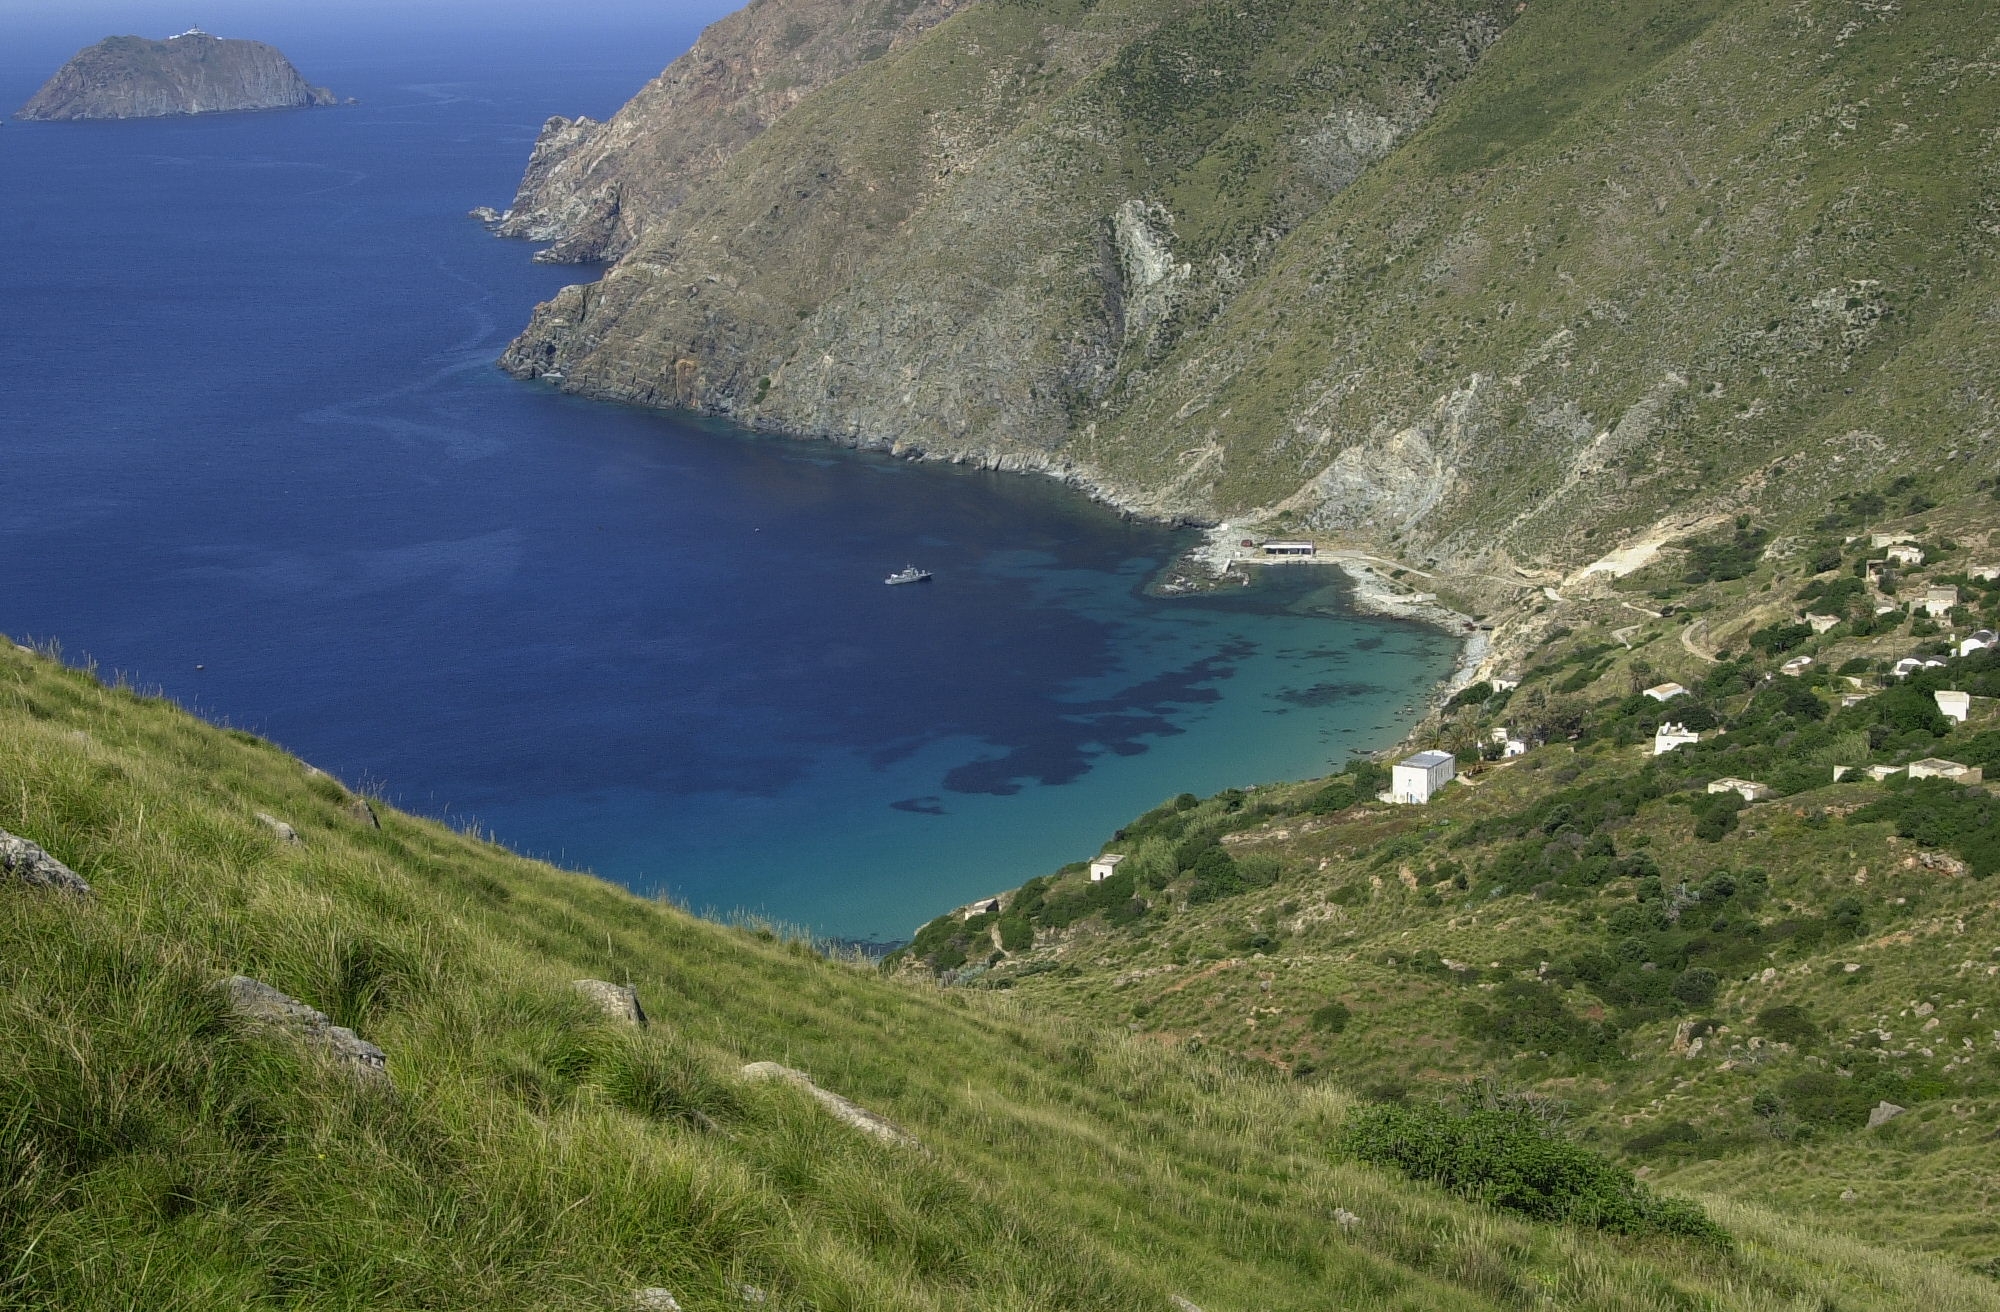 A wild island in the mediterranean sea